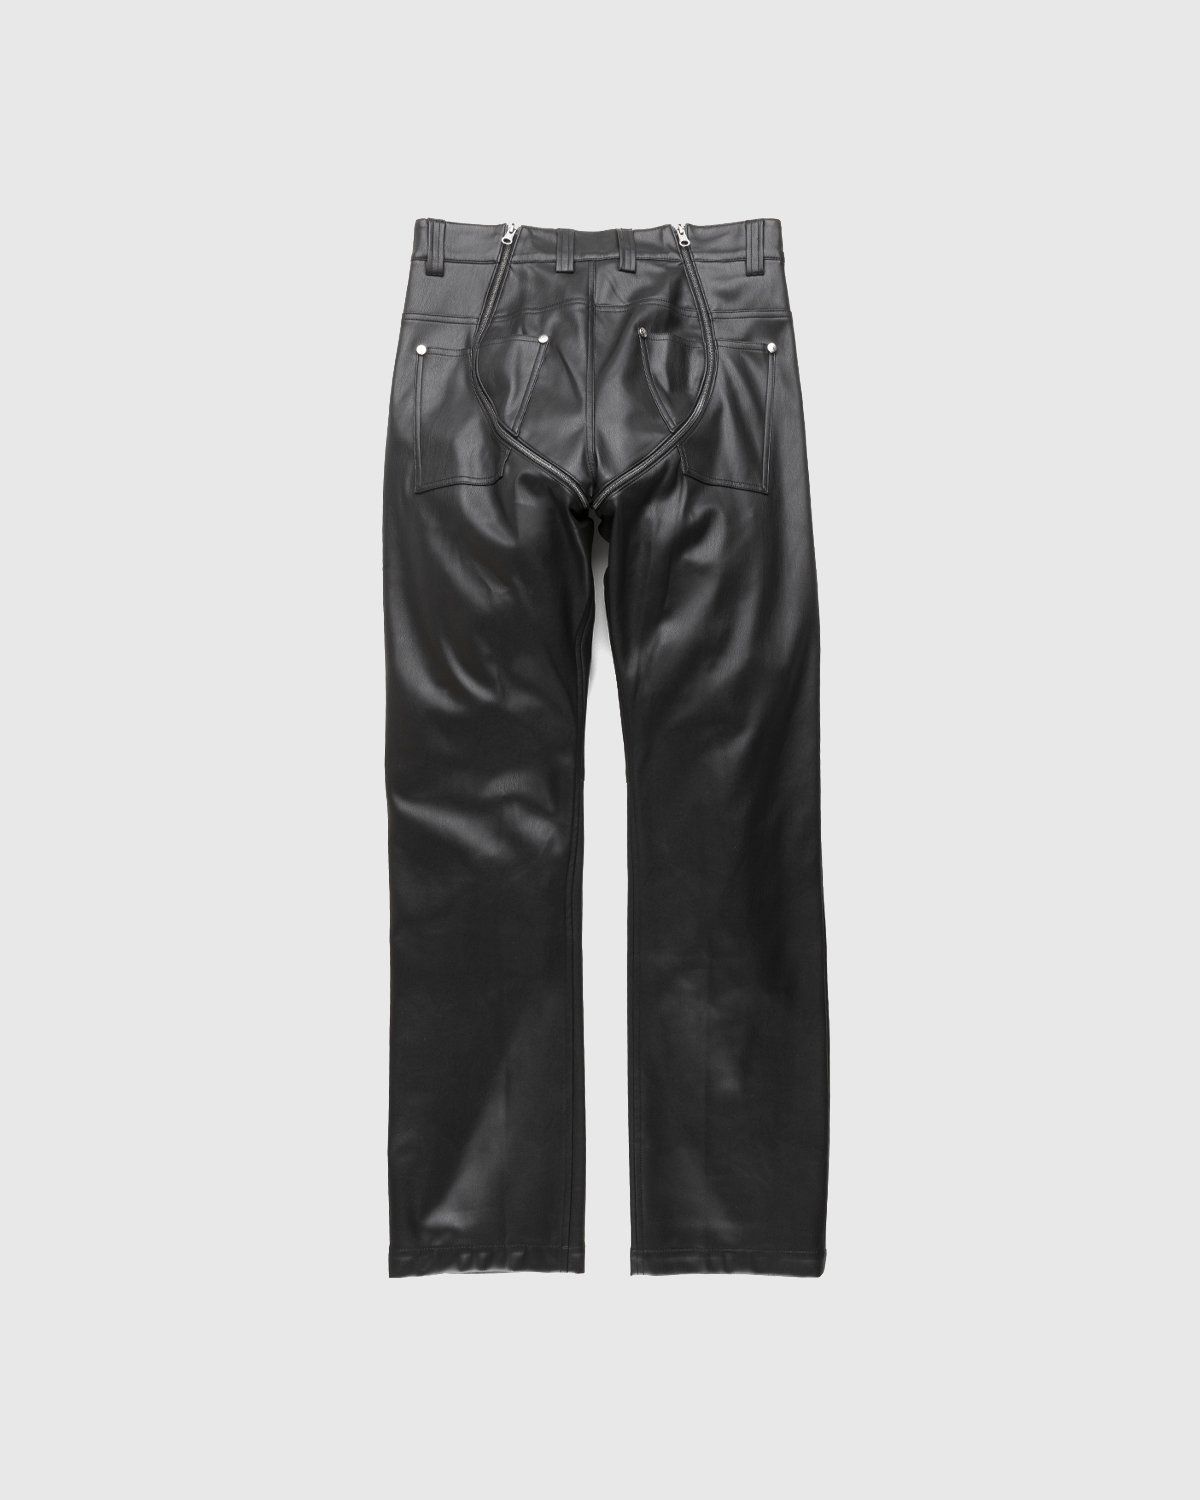 GmbH – Lata Pleather Pants Black - Leather Pants - Black - Image 2